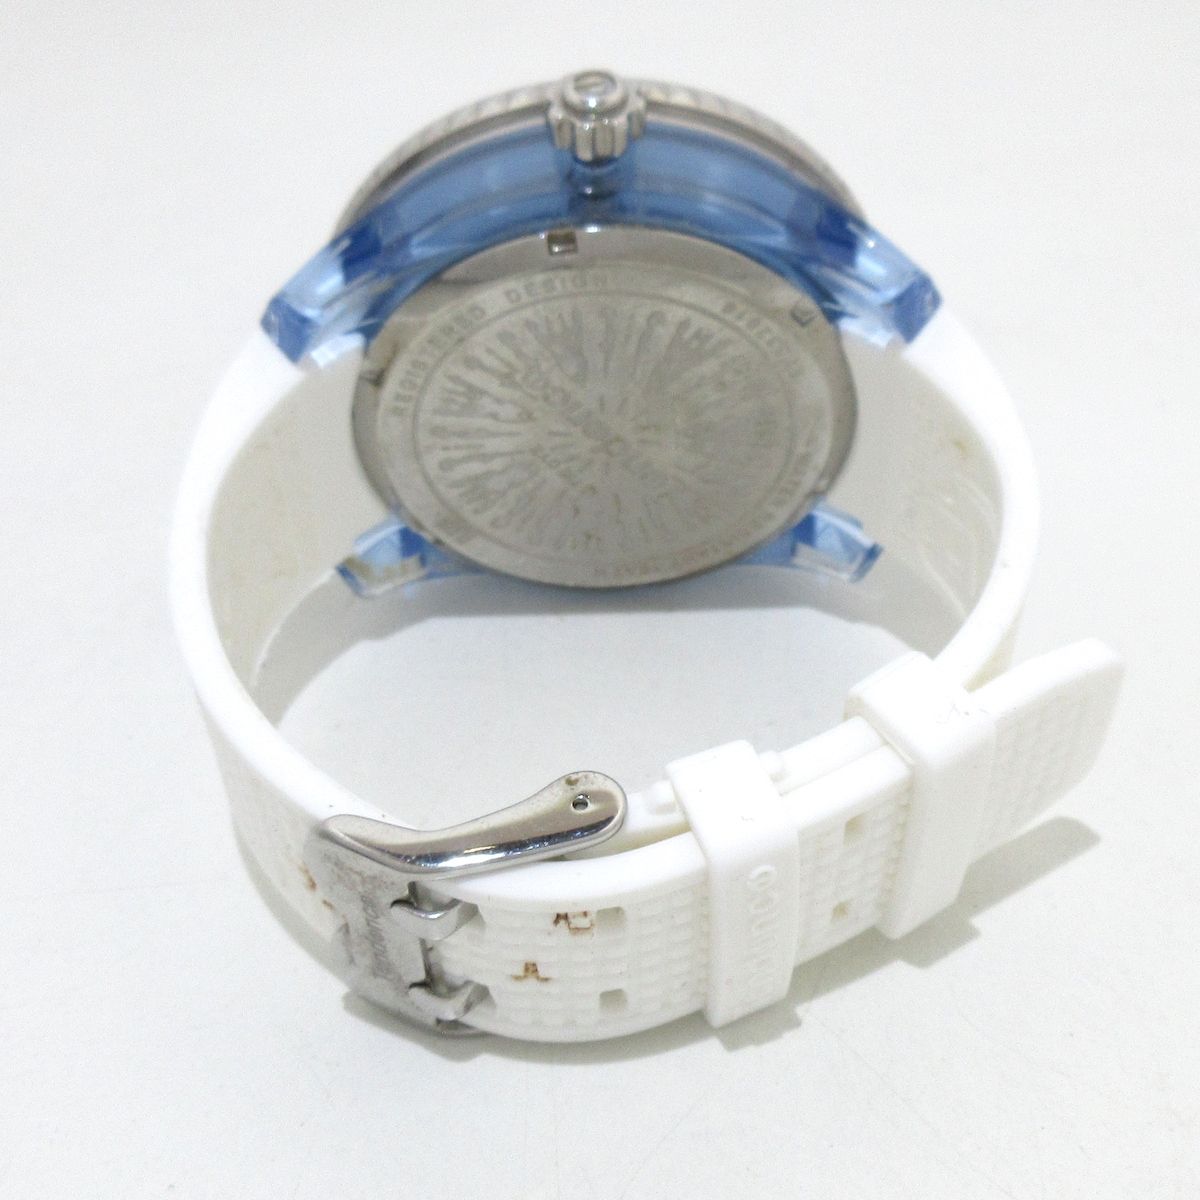 TENDENCE(テンデンス) 腕時計 TIE DYE Collection TY532016 メンズ 白 